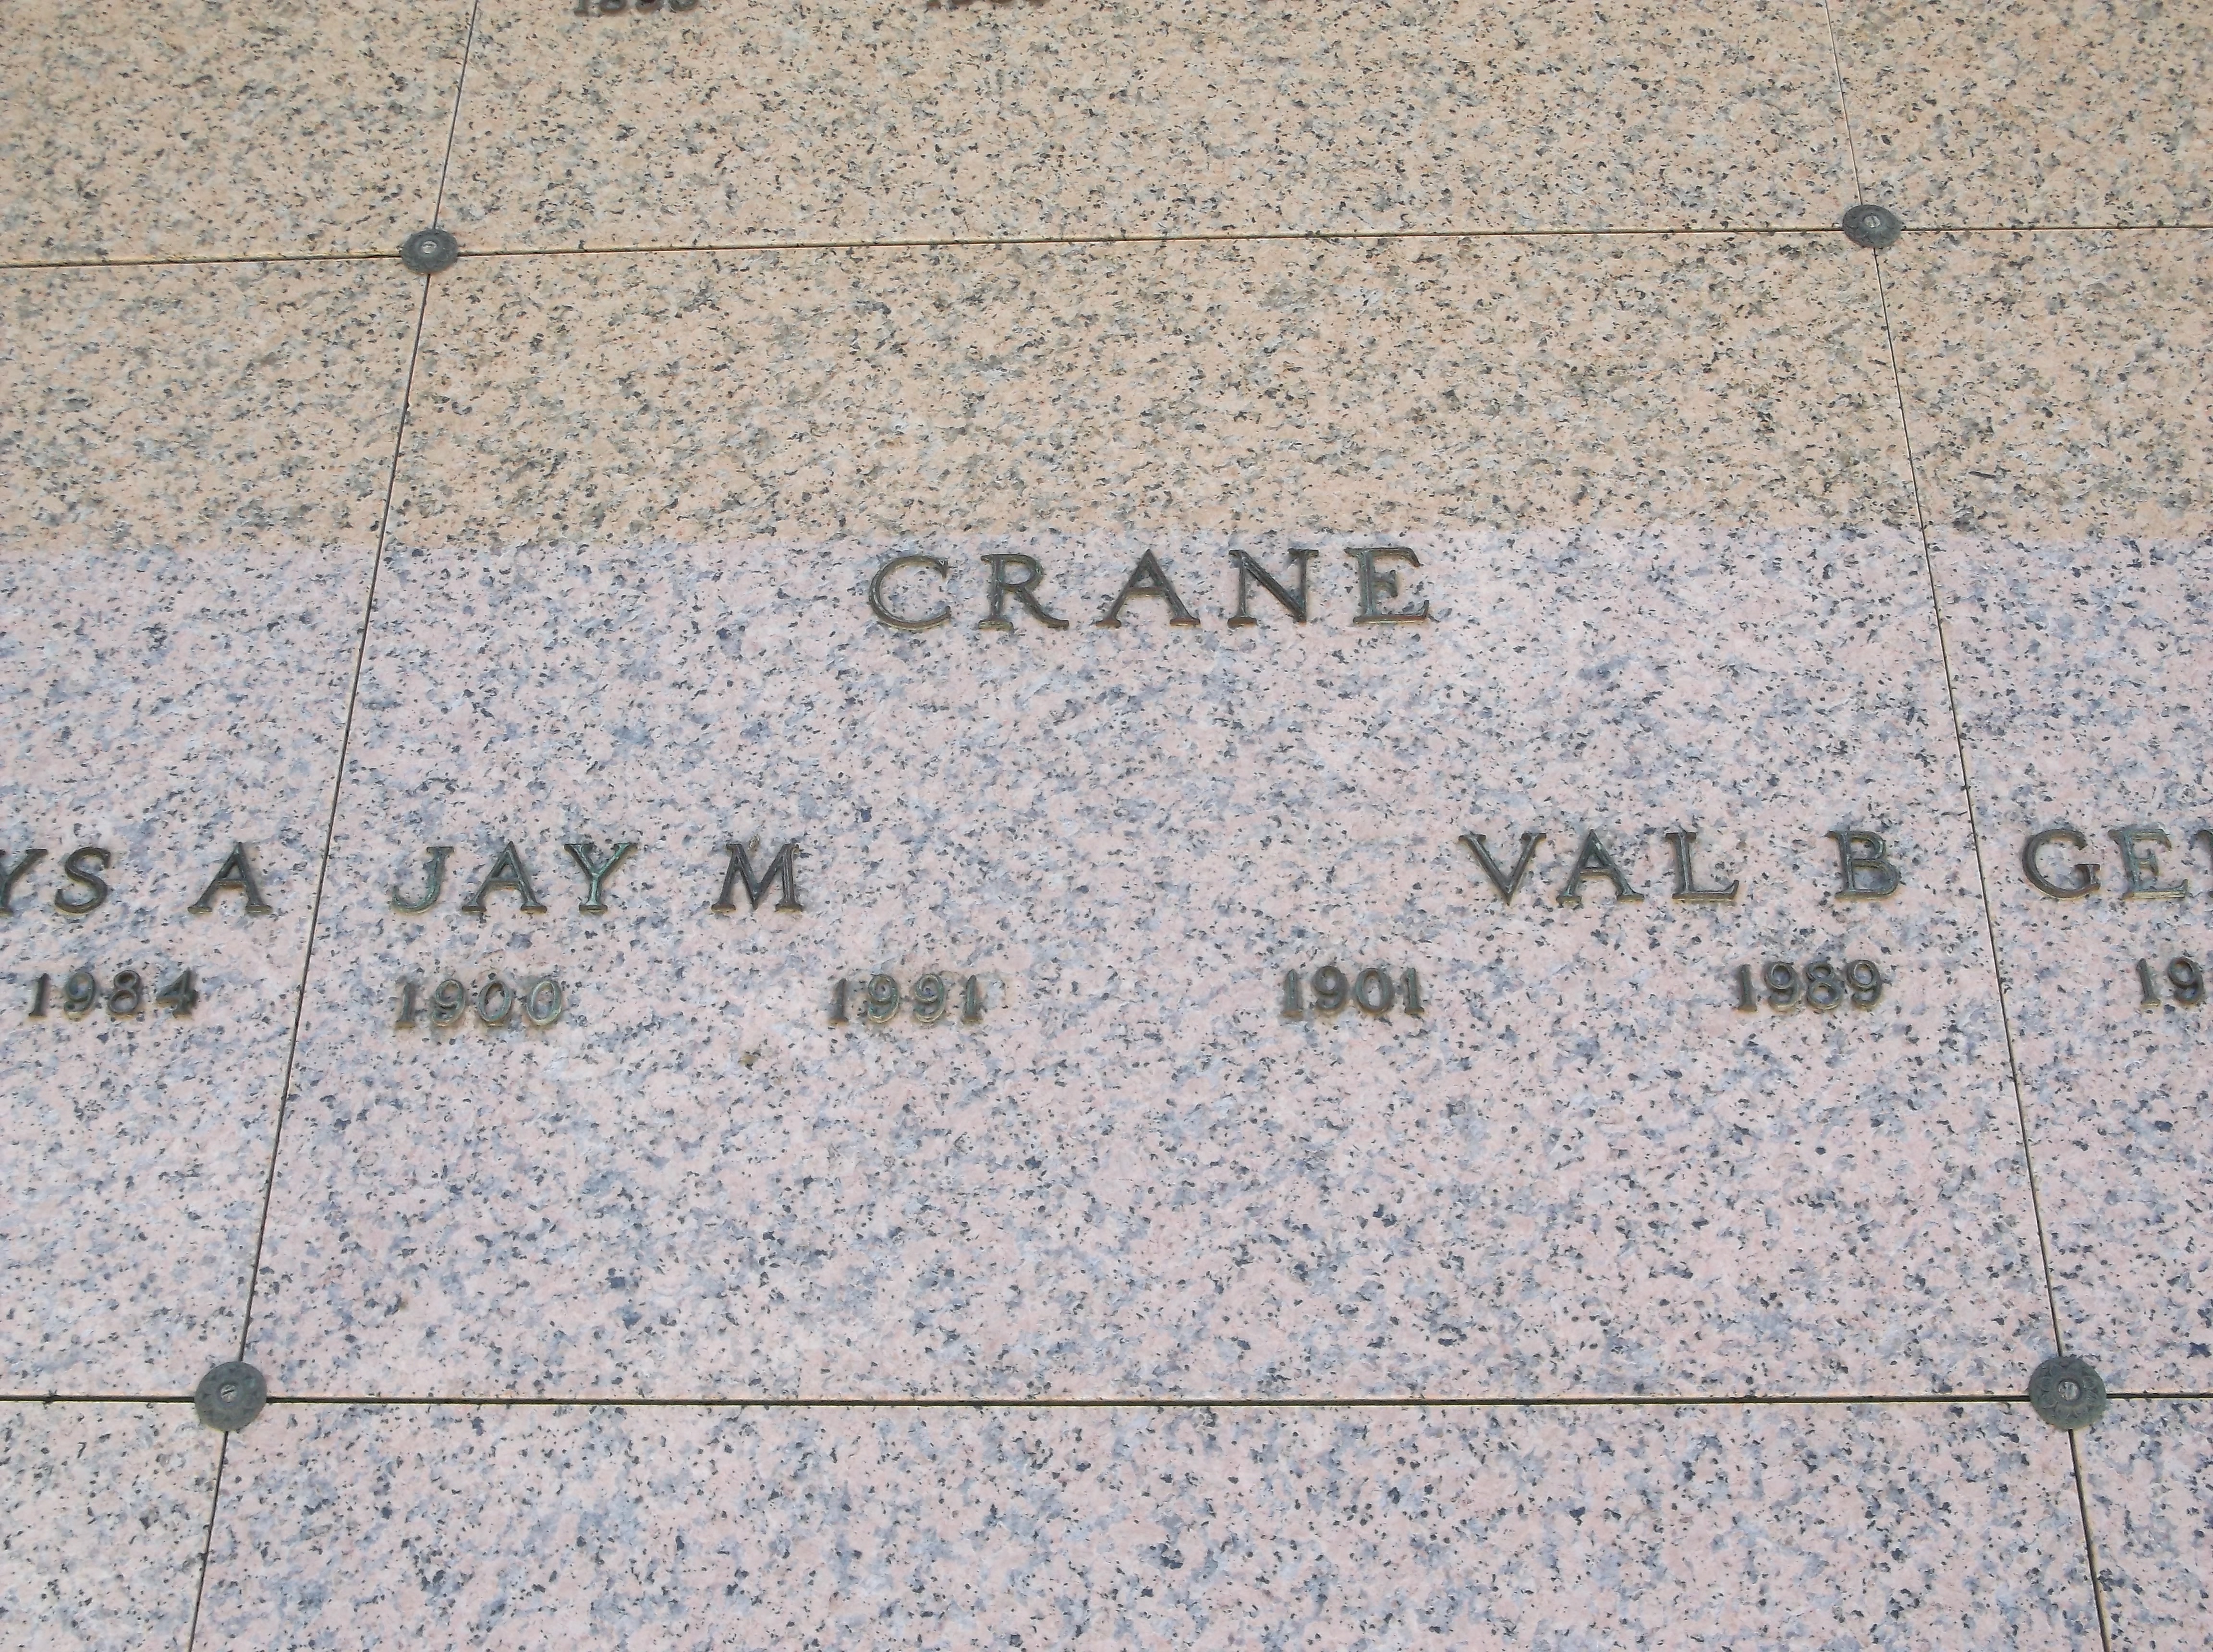 Jay M Crane